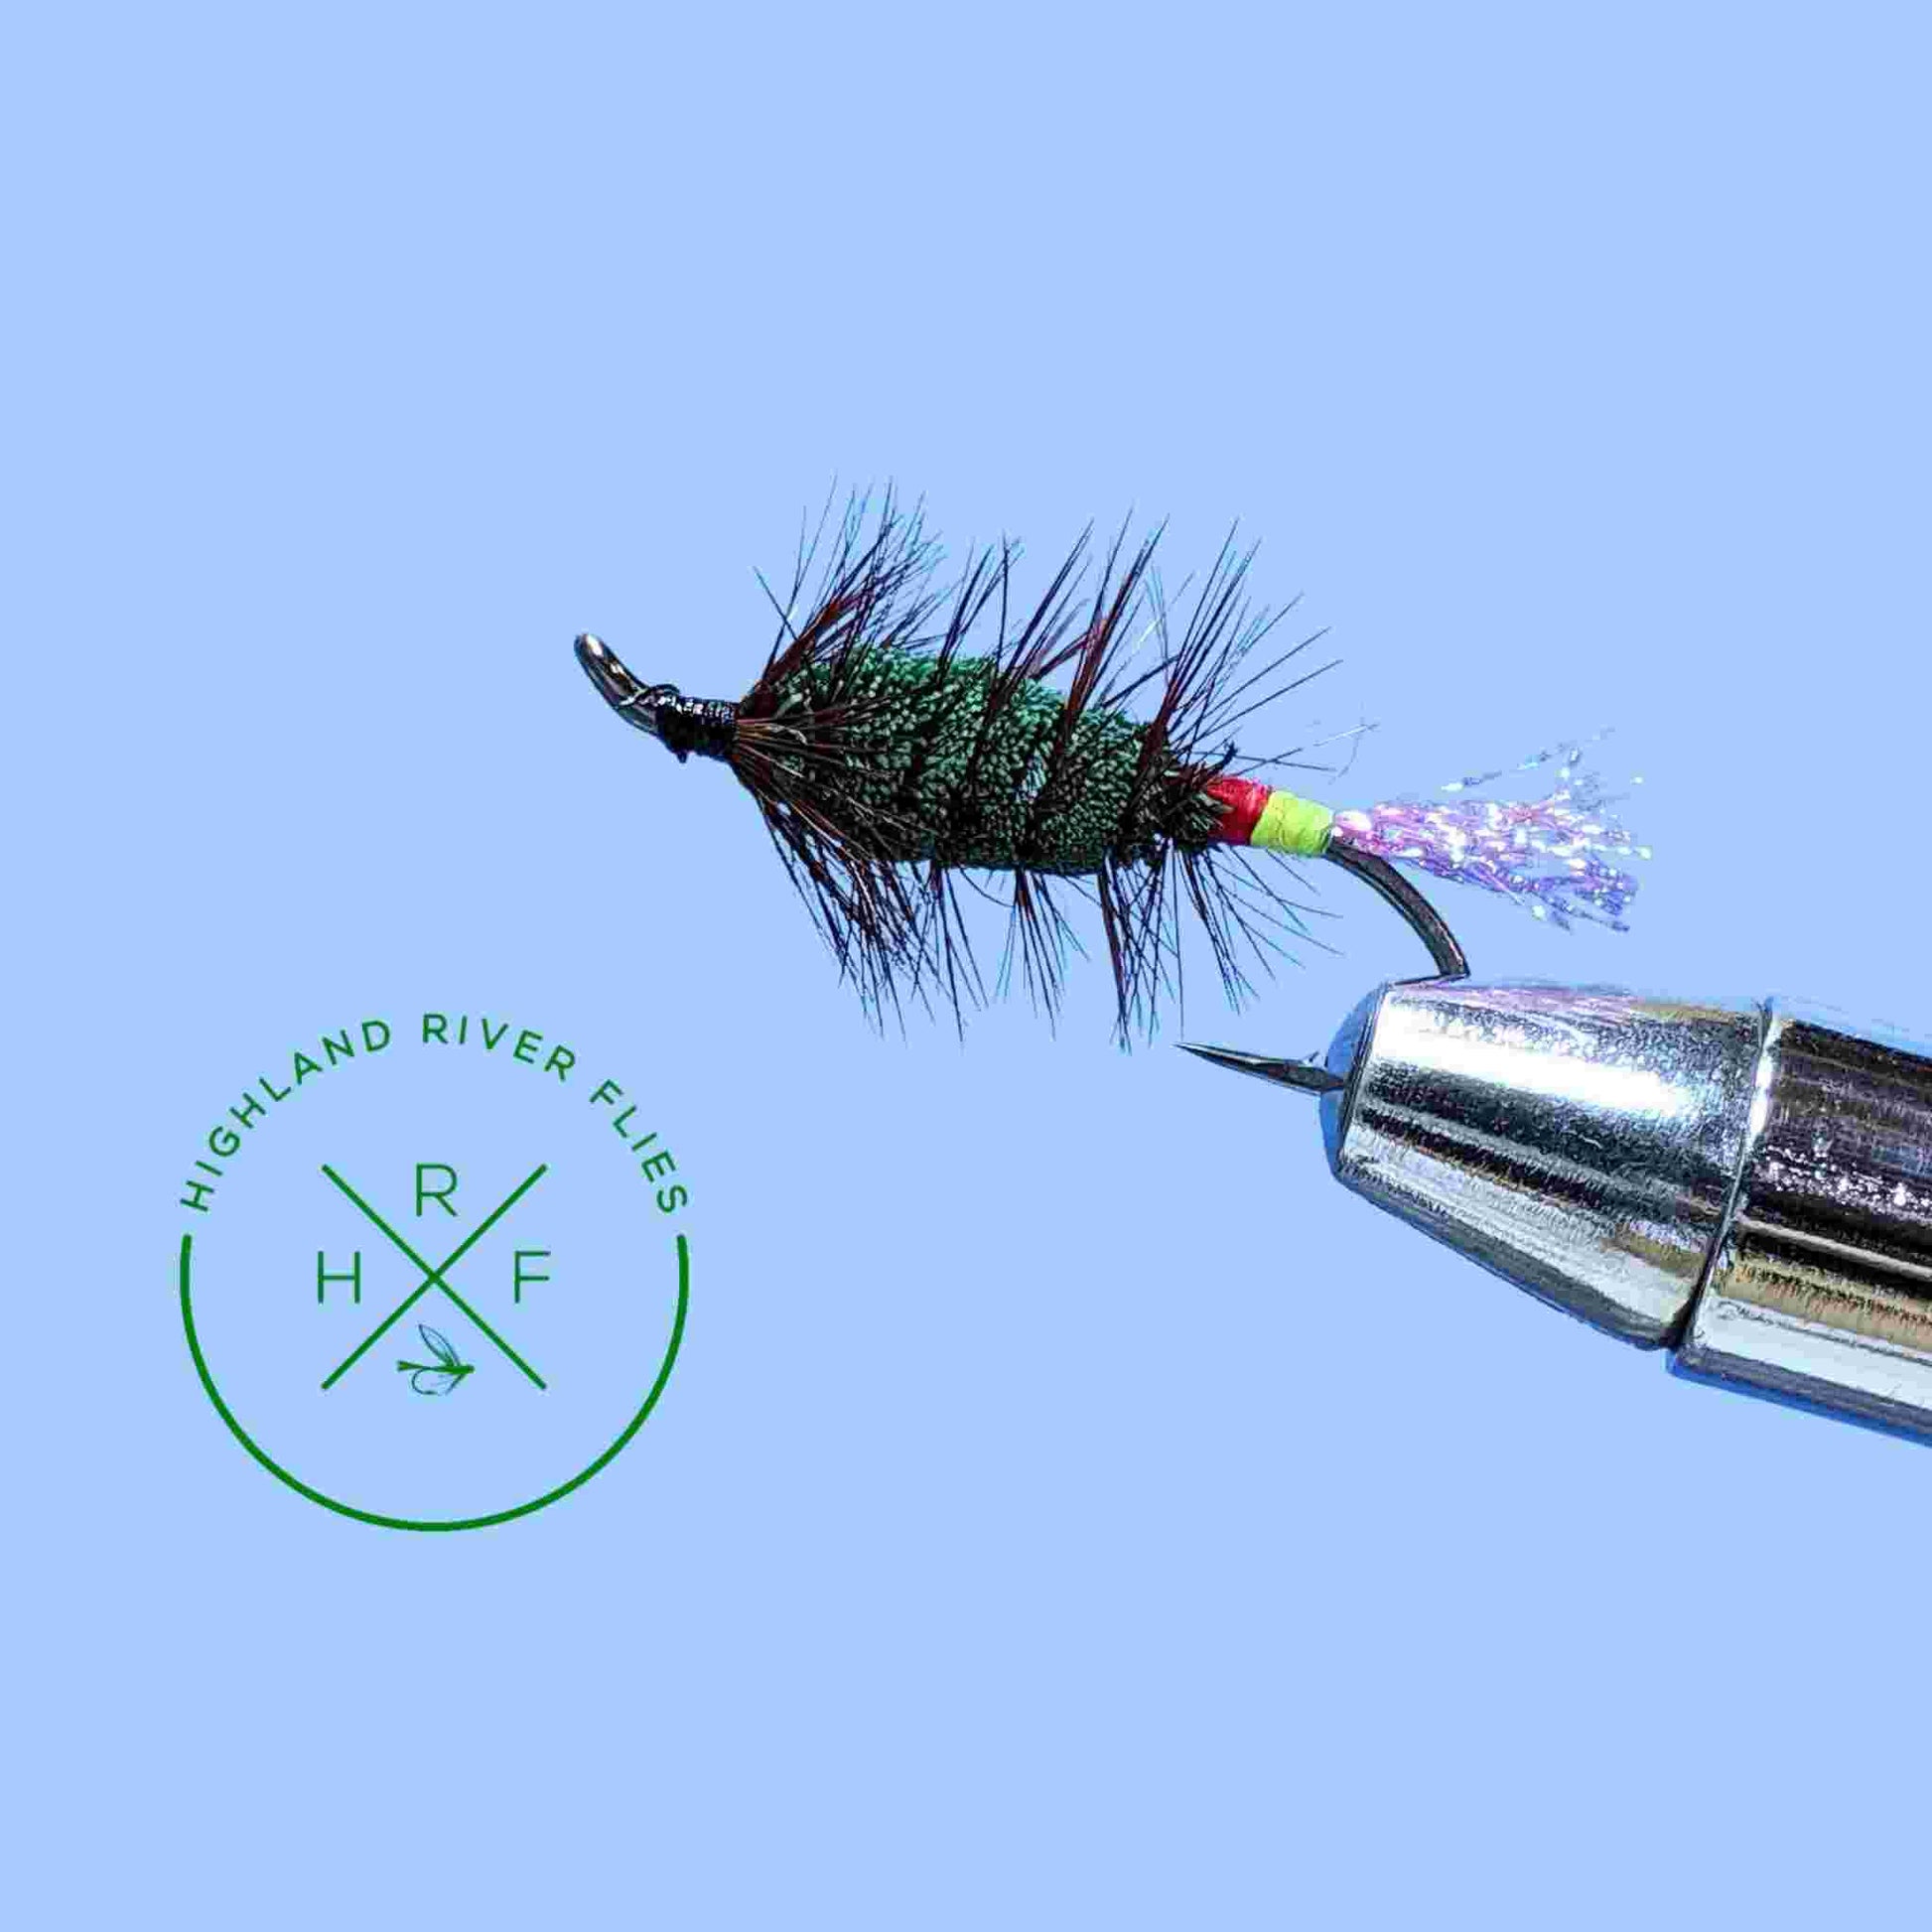 Green Machine – Highland River Flies